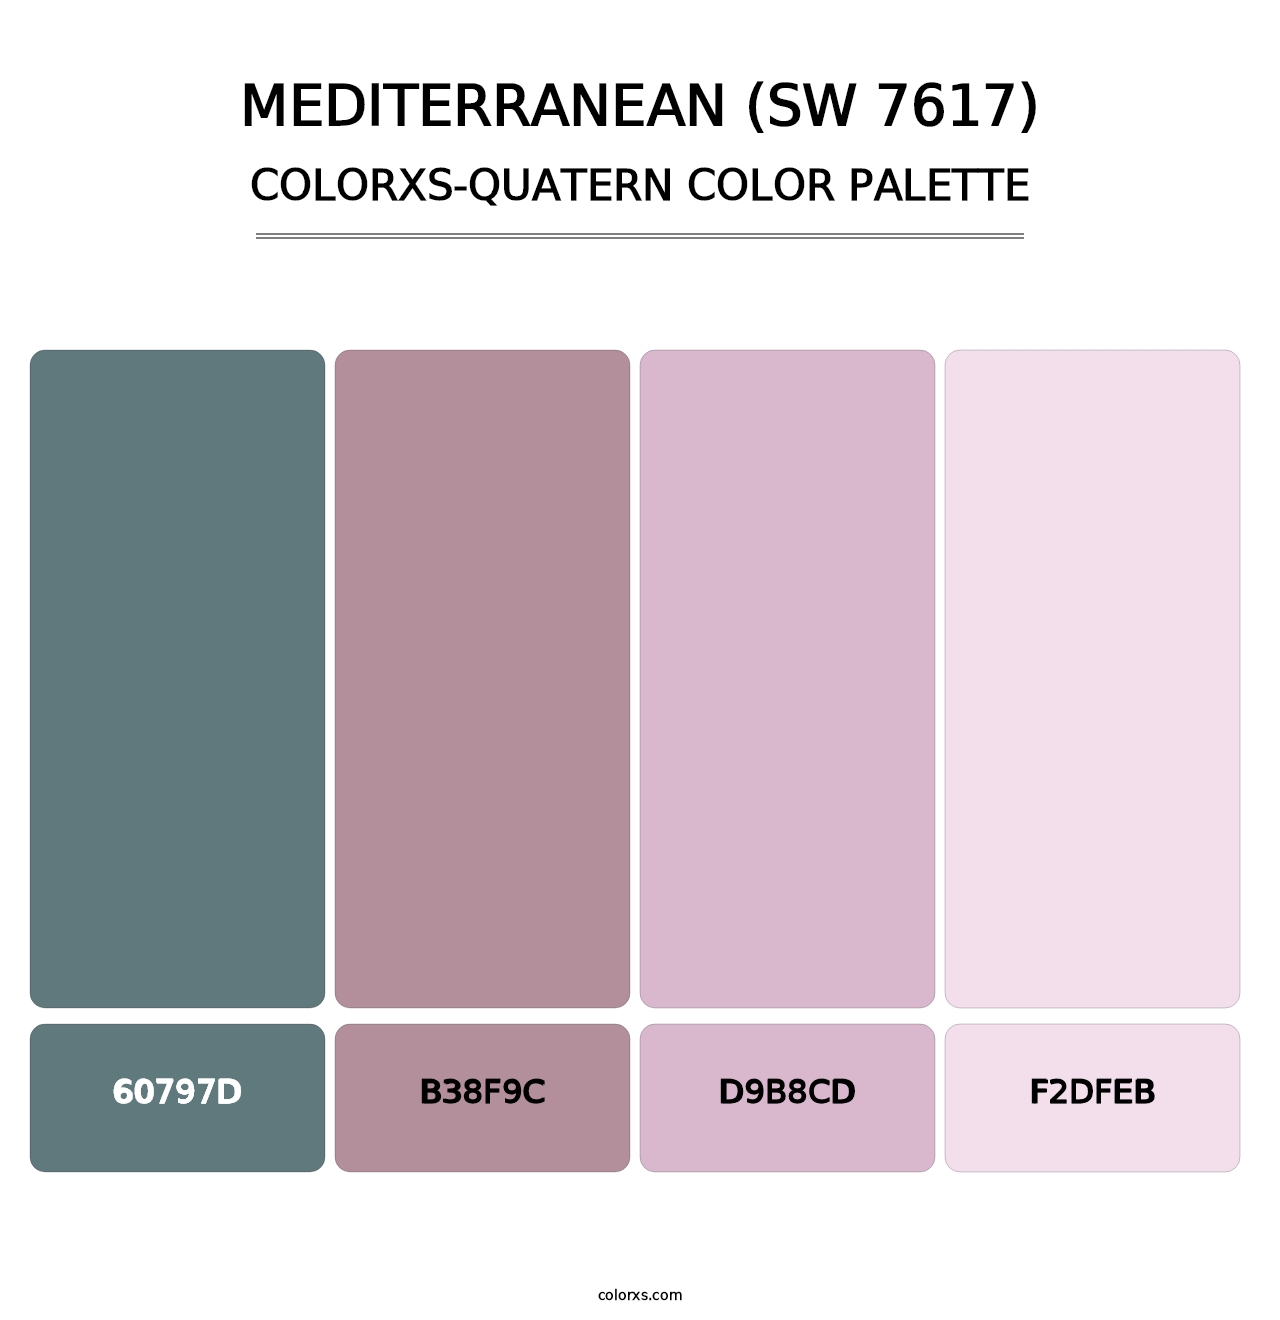 Mediterranean (SW 7617) - Colorxs Quatern Palette